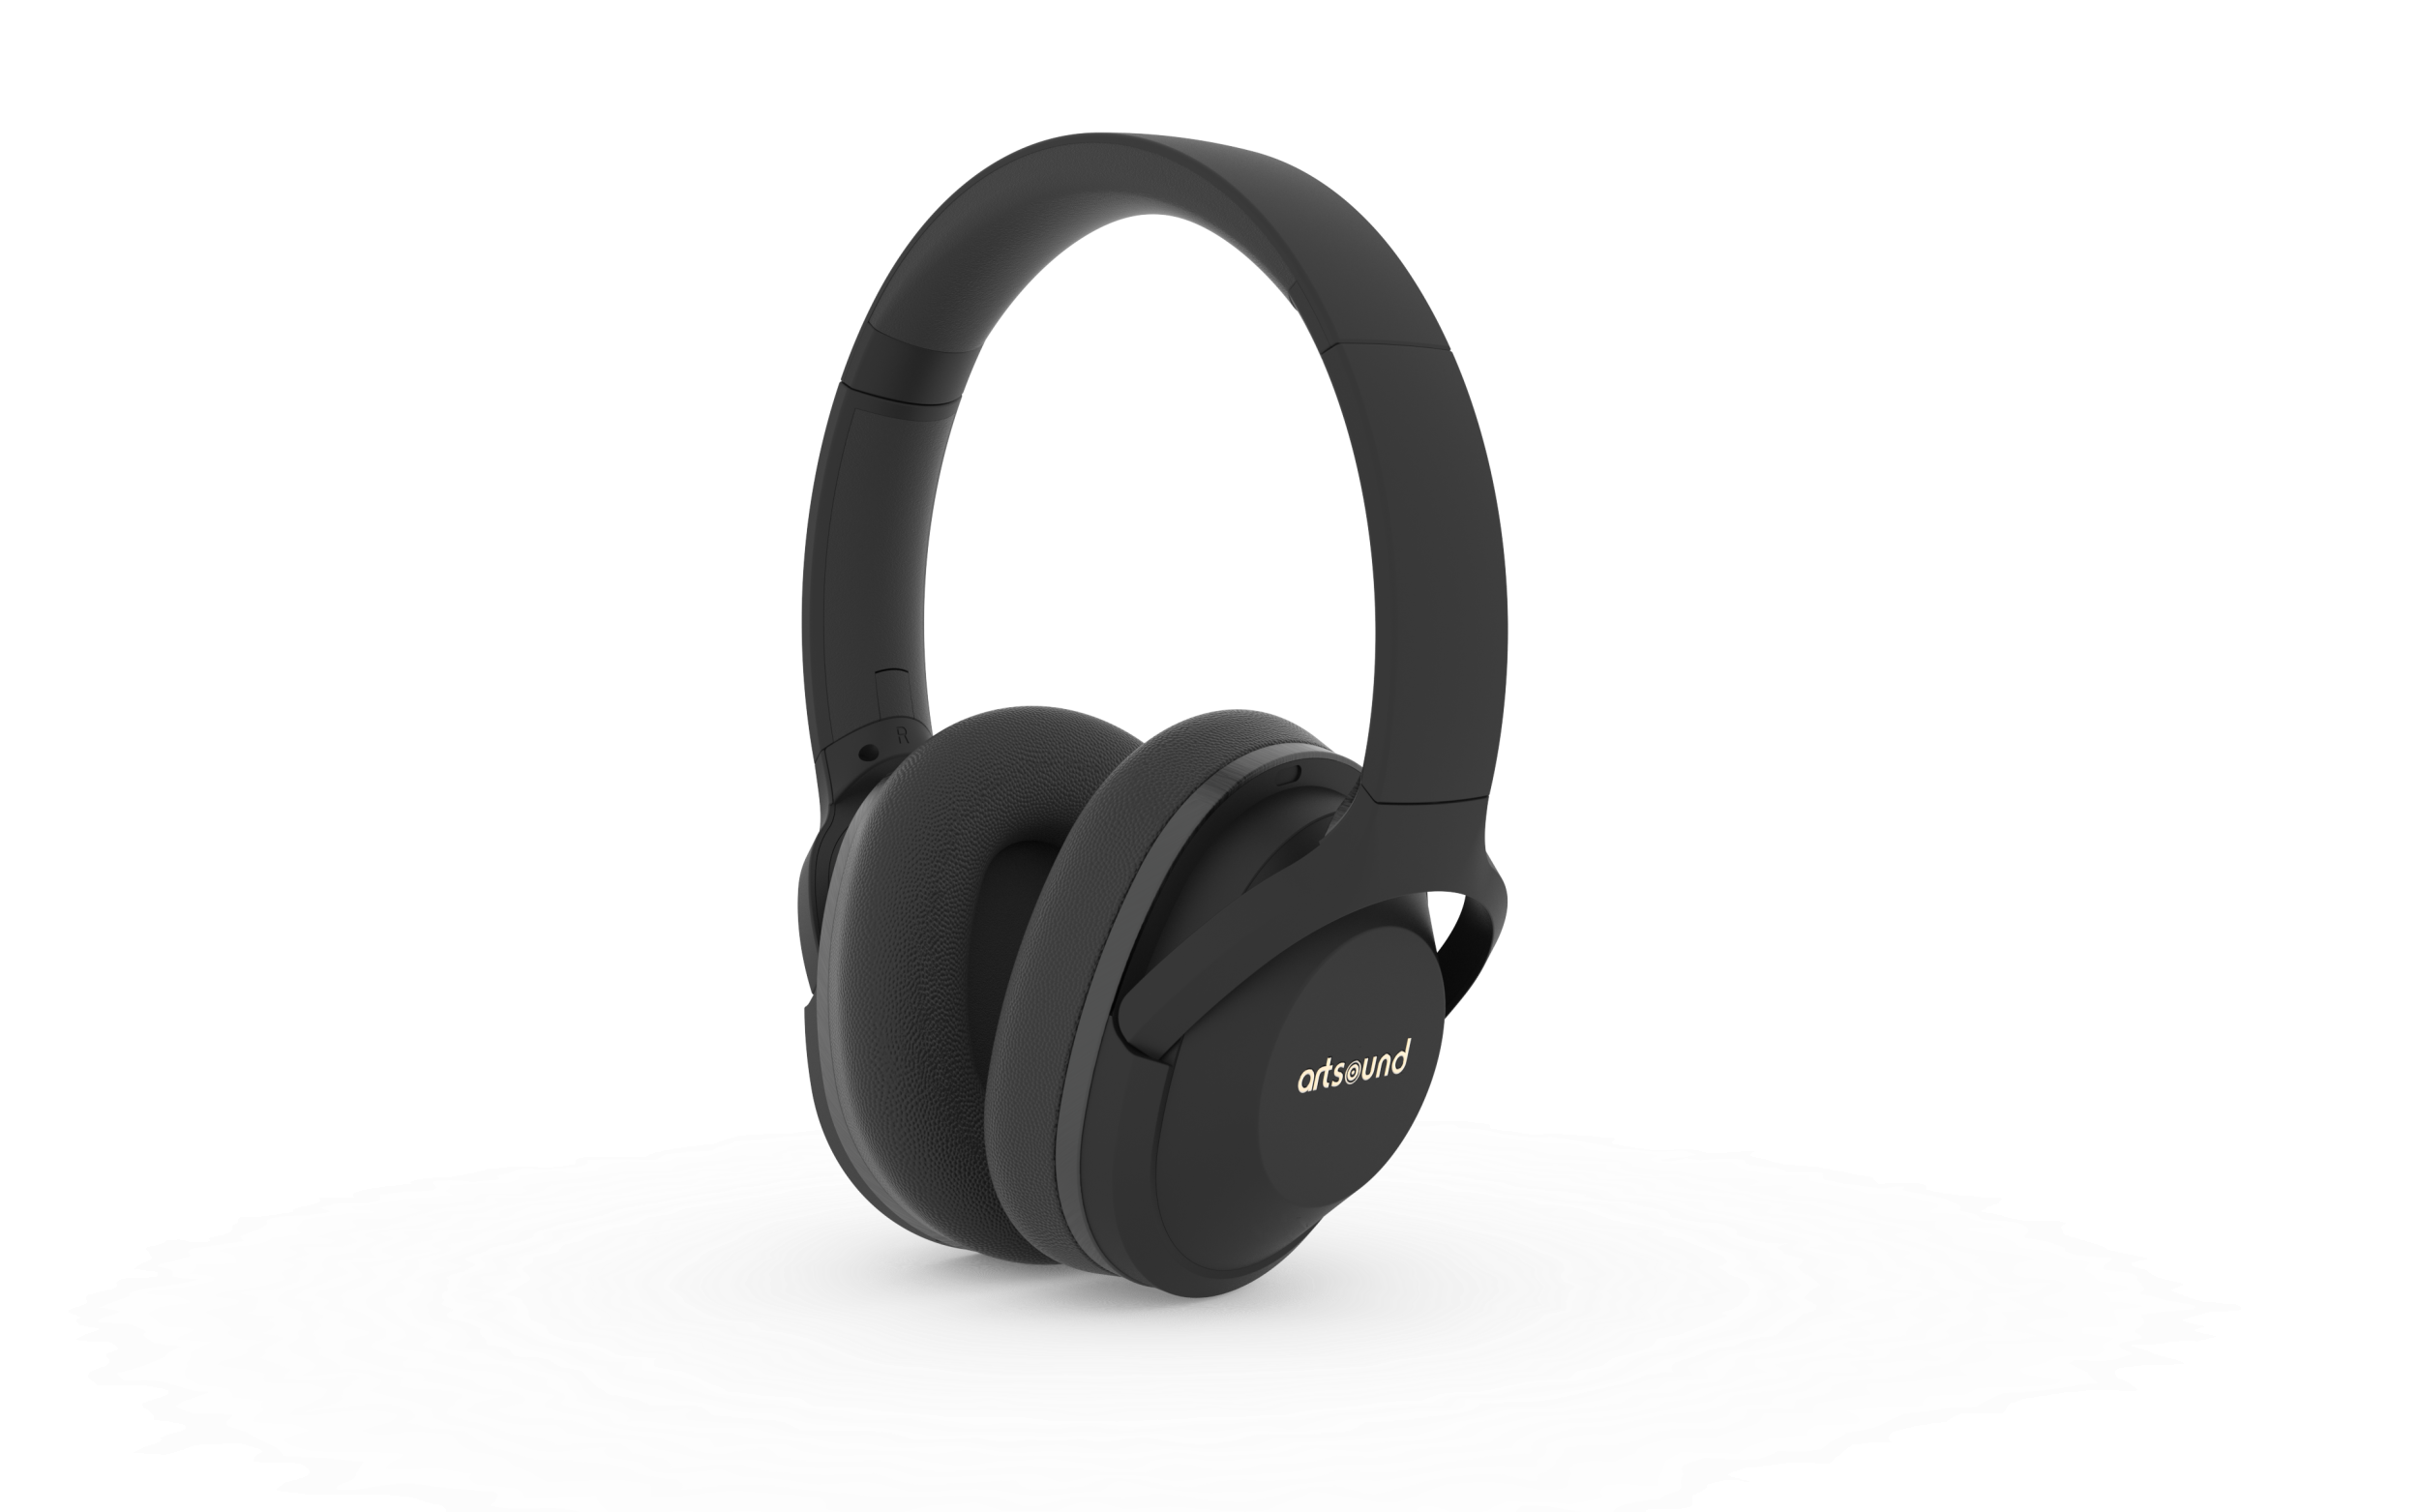 BRAINWAVE07, ANC wireless over-ear headphones, noir